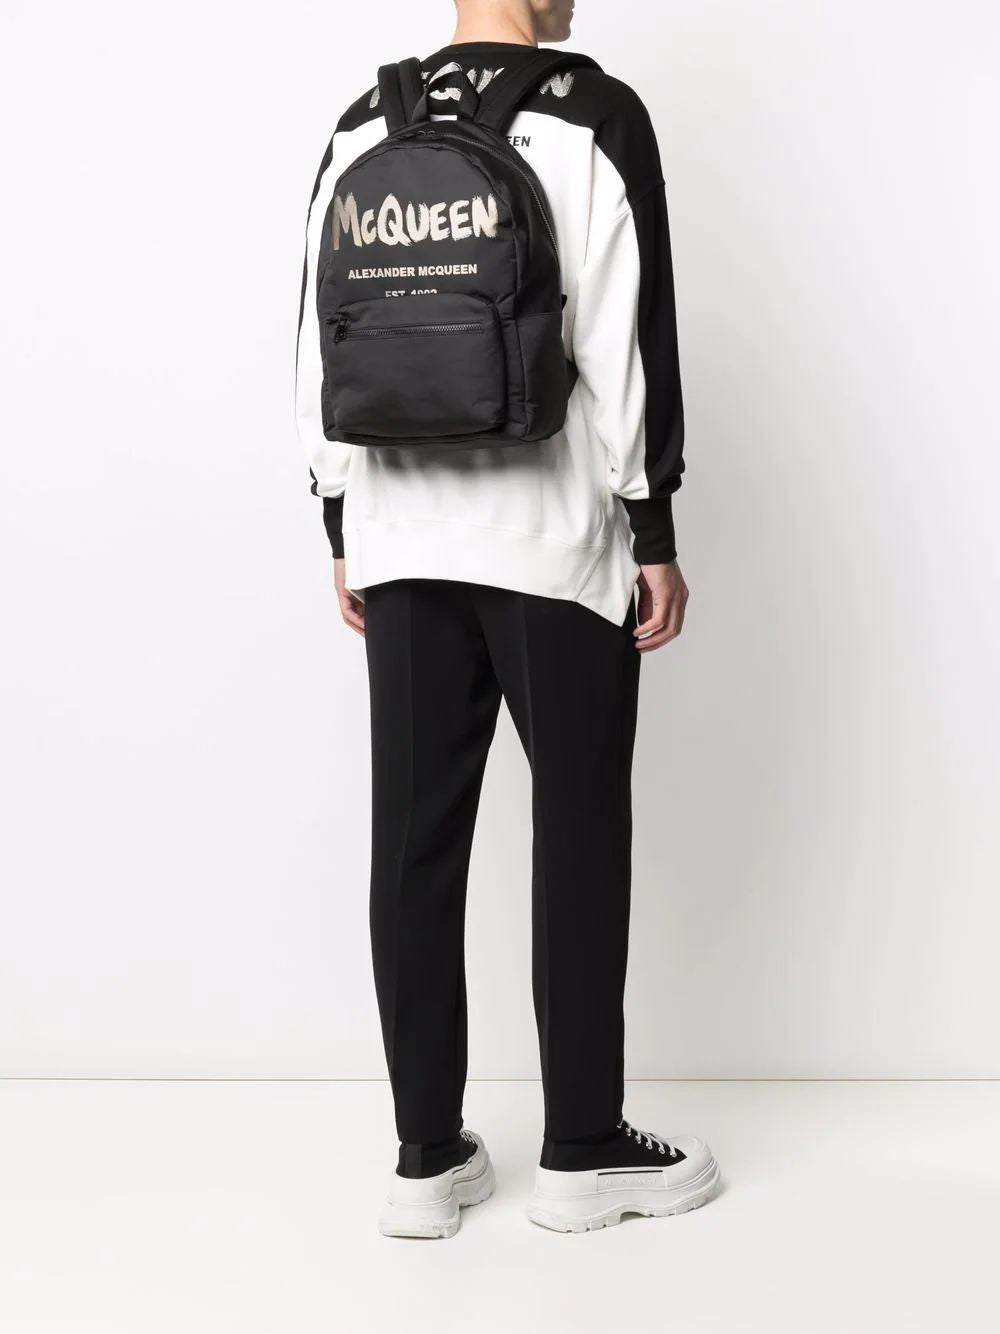 ALEXANDER MCQUEEN Graffiti XL Backpack for Men - Black